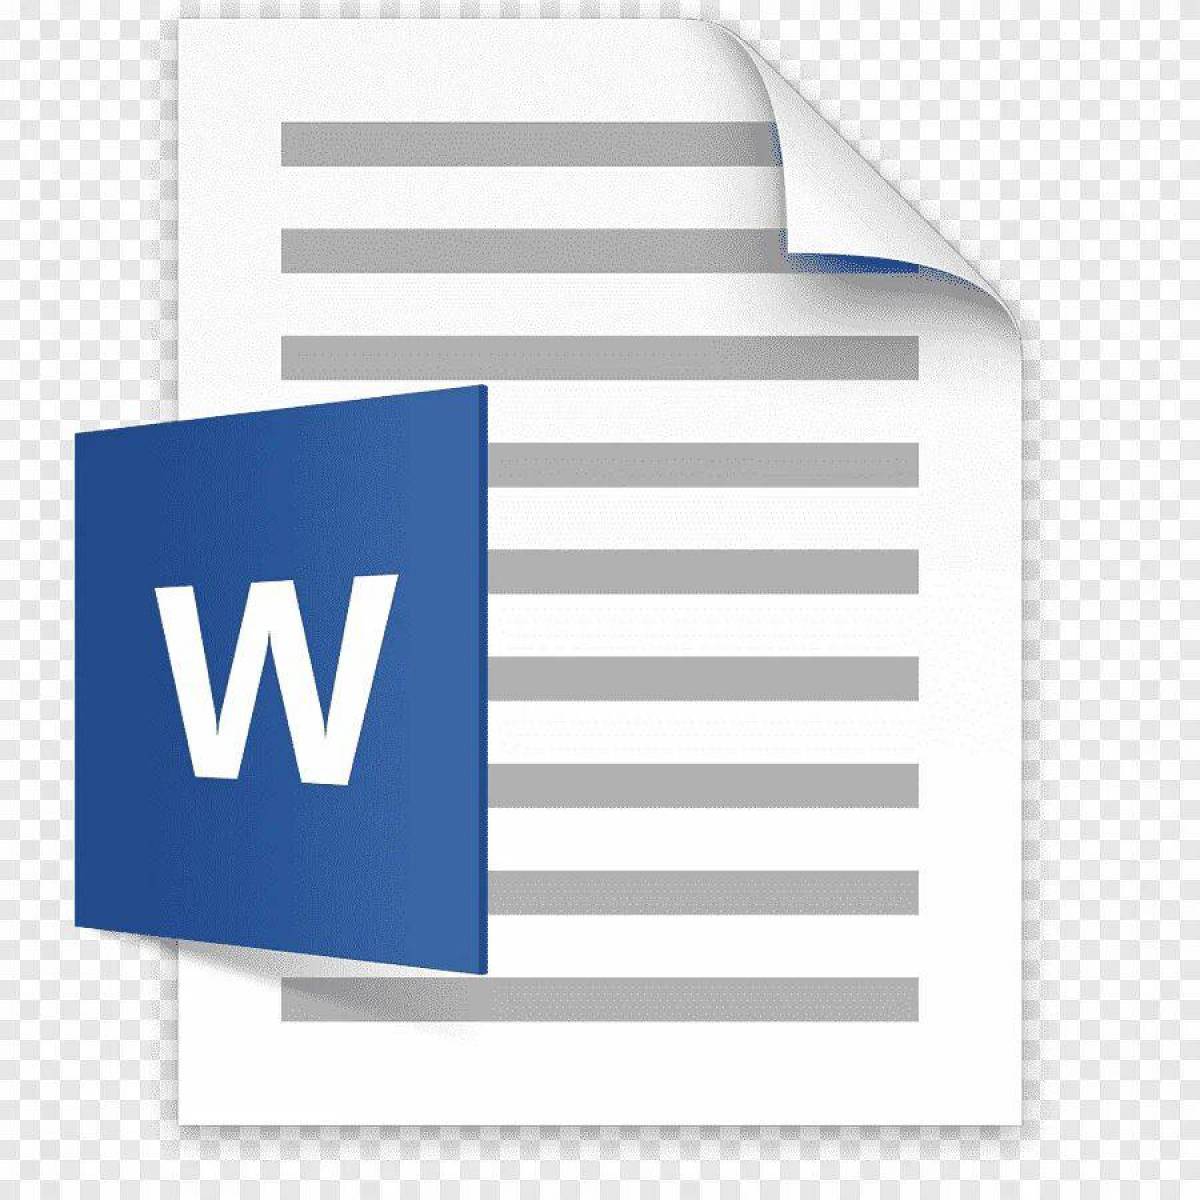 Что такое ярлык документа. Значок Microsoft Word. Значок Microsoft Word PNG. Значок файла MS Word. Word без фона.